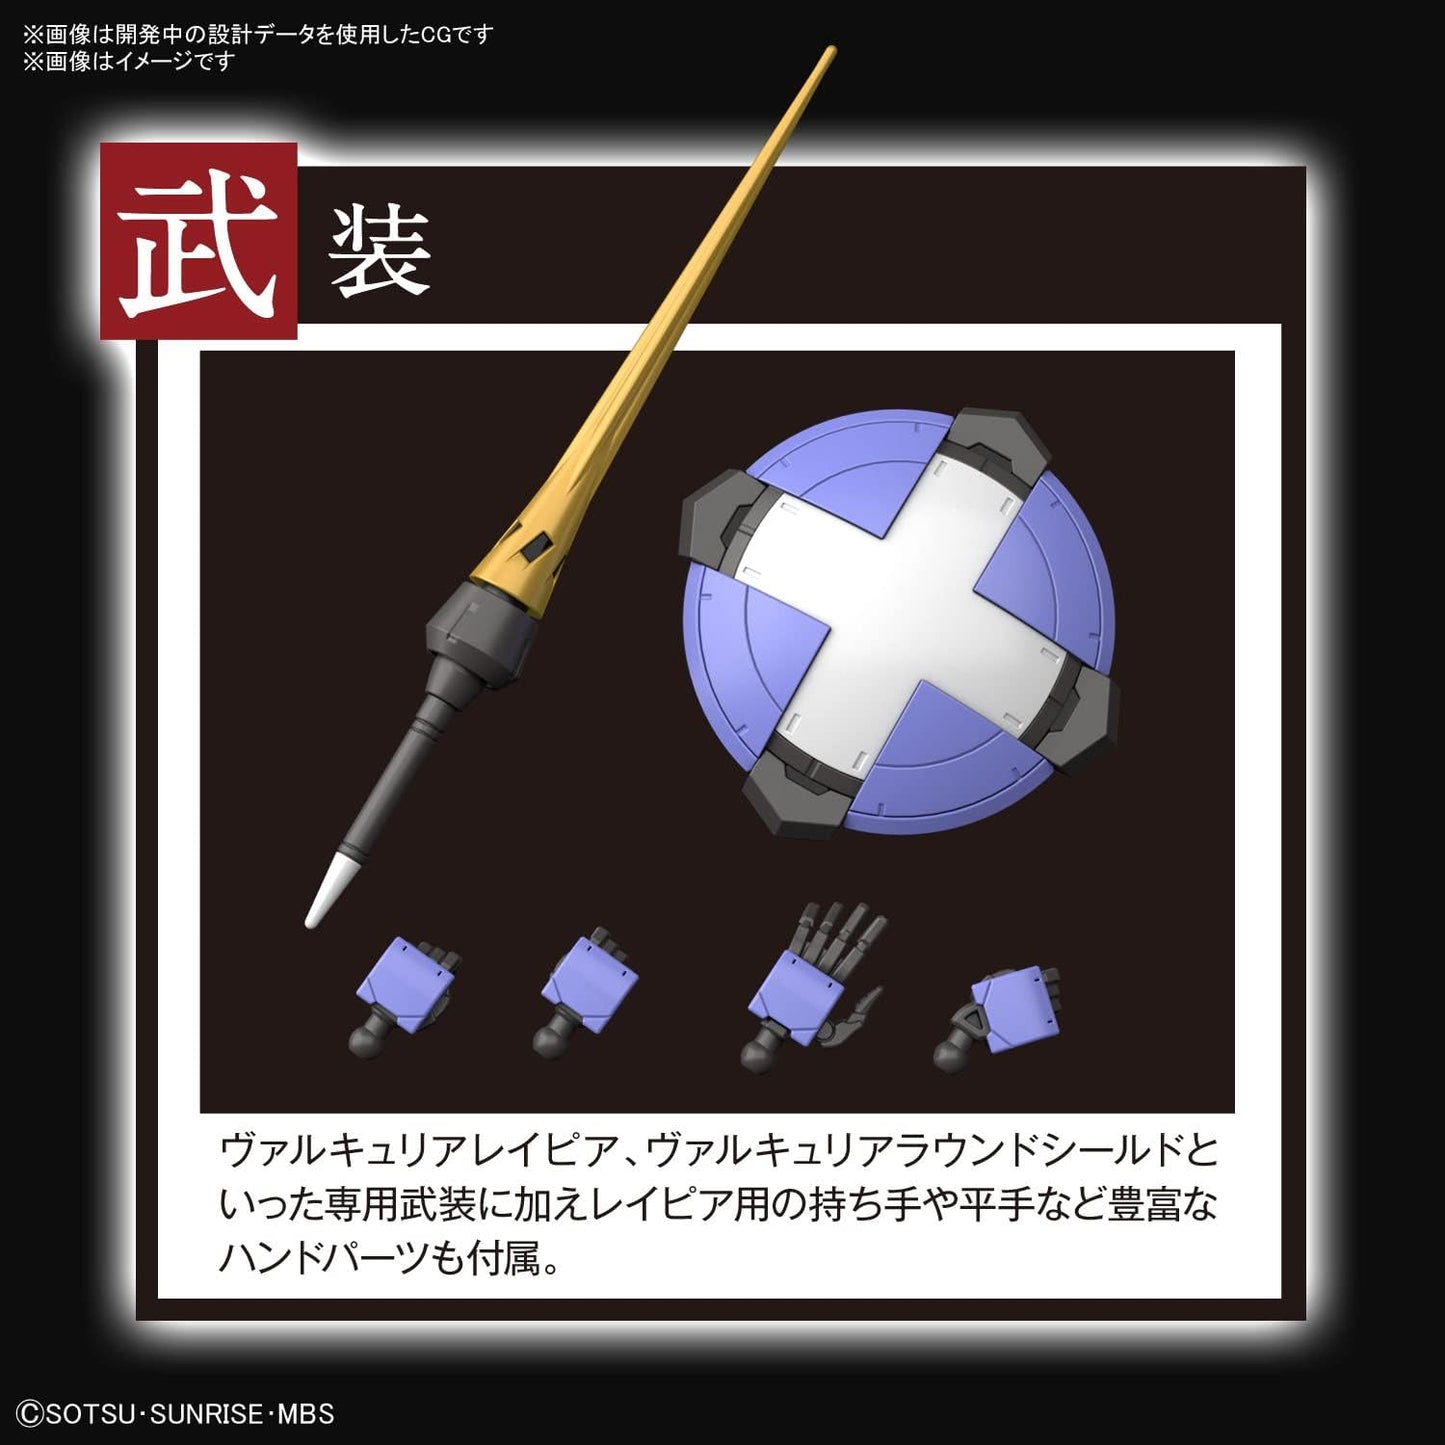 HG 1/144 "Mobile Suit Gundam Iron-Blooded Orphans G" Sigrun | animota